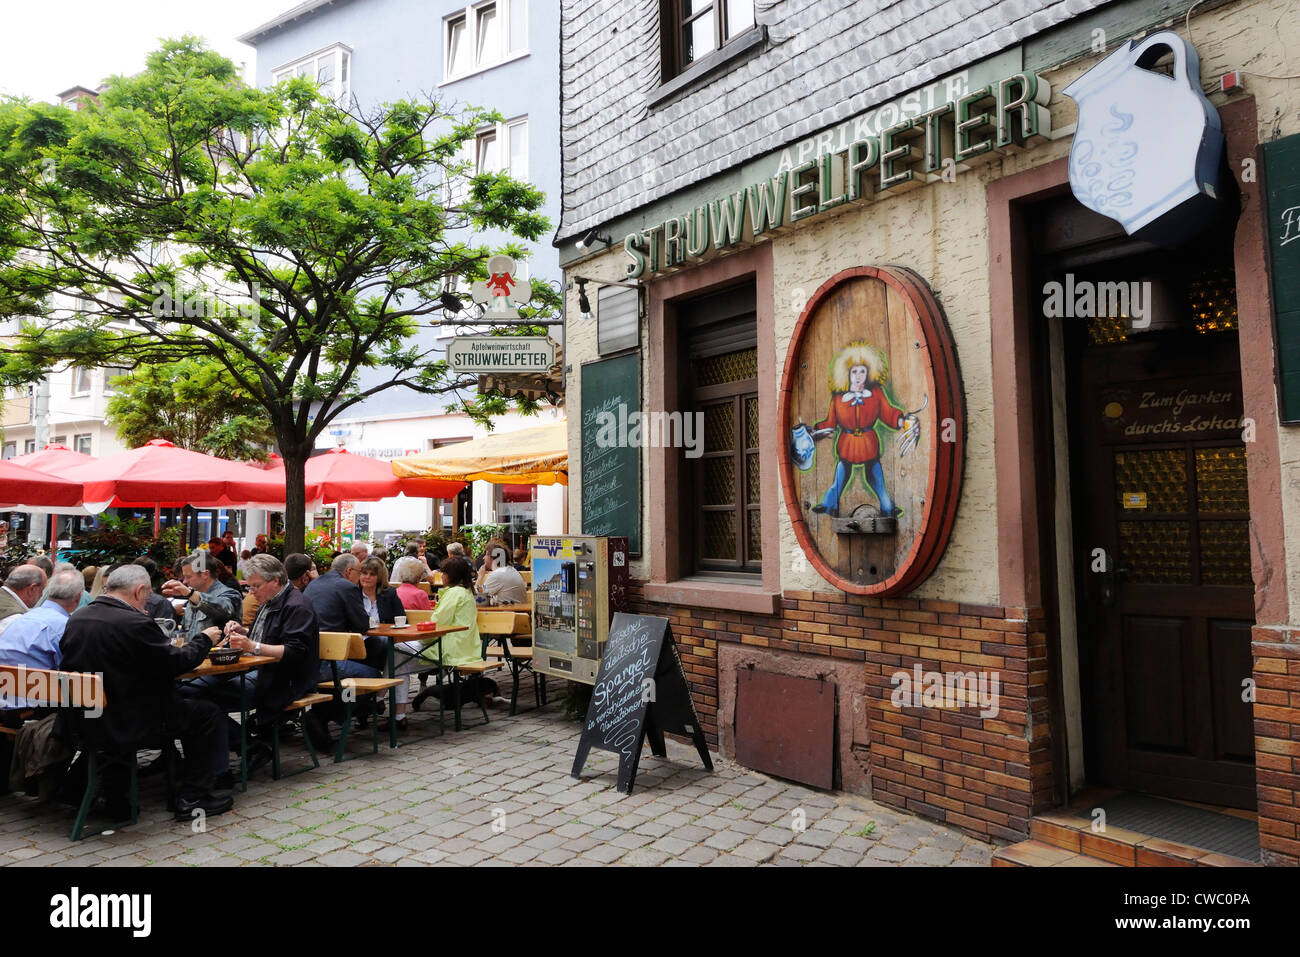 Strewwelpeter cider tavern, Alte Sachsenhausen, Frankfurt, Germany. Stock Photo